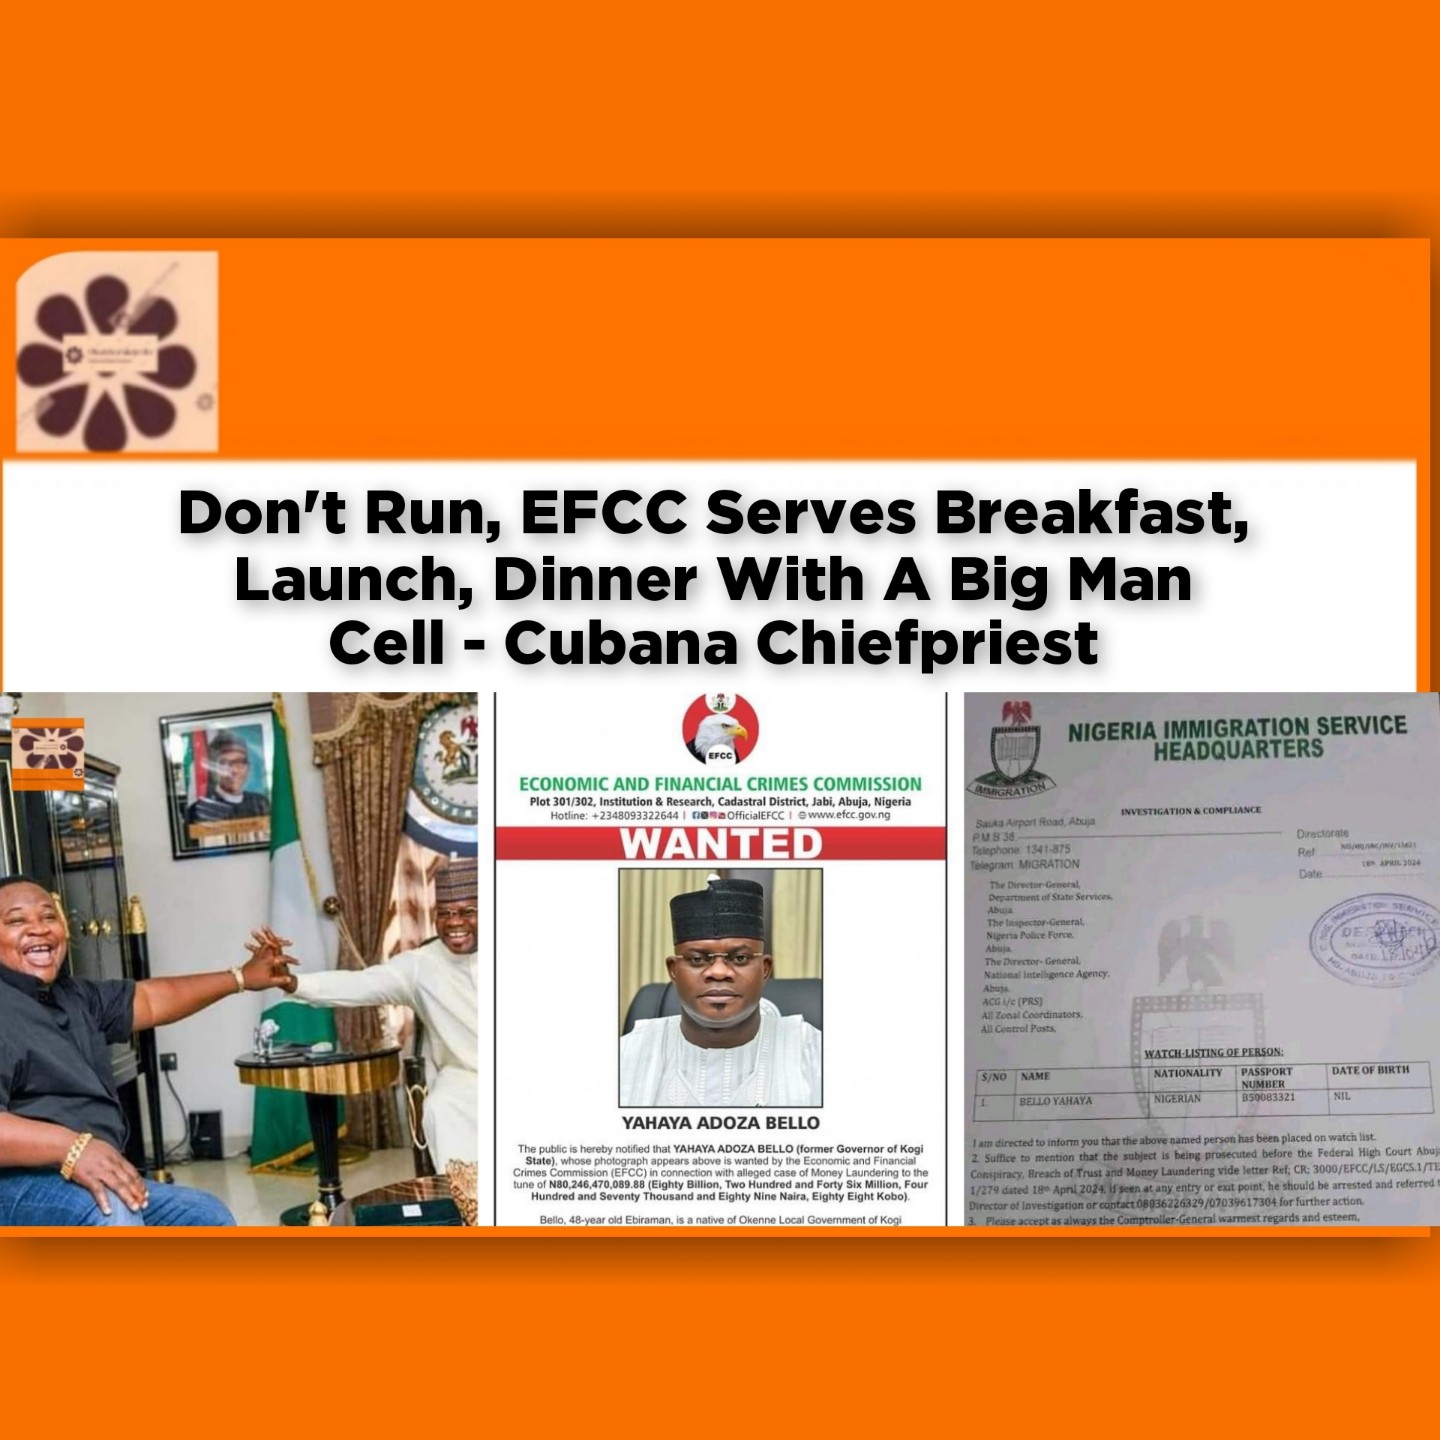 Don't Run, EFCC Serves Breakfast, Launch, Dinner With A Big Man Cell - Cubana Chiefpriest ~ OsazuwaAkonedo #Kogi #Bello #ChiefPriest #Cubana #EFCC #MoneyLaundering #NIS #Ododo #Usman #Yahaya